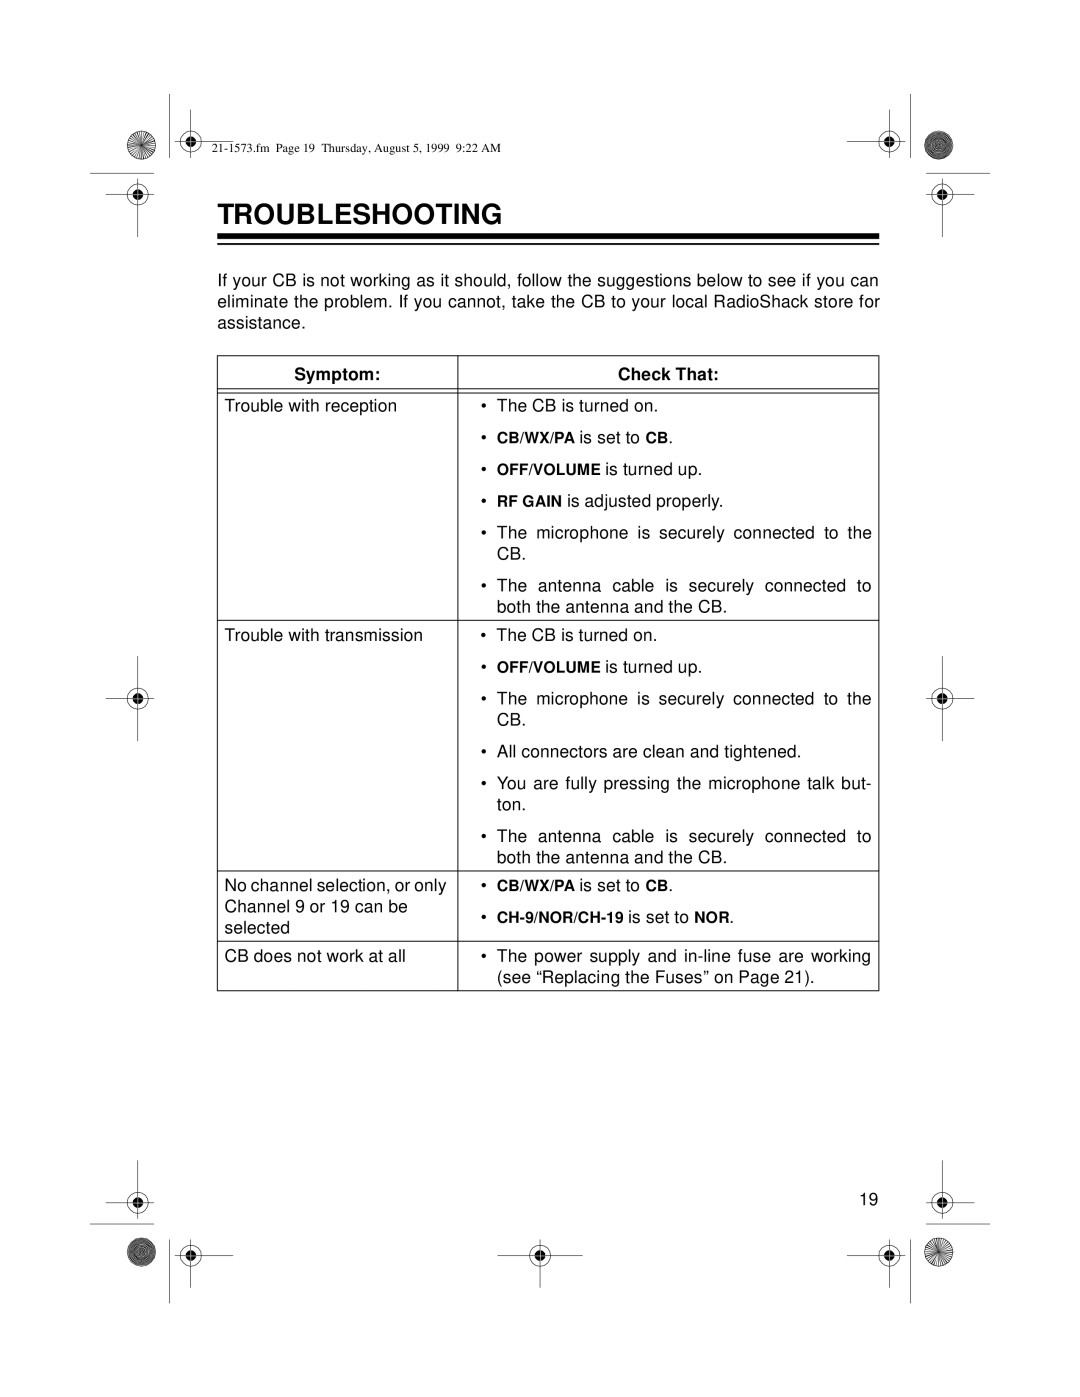 Samsung TRC-445 owner manual Troubleshooting, Symptom, Check That 